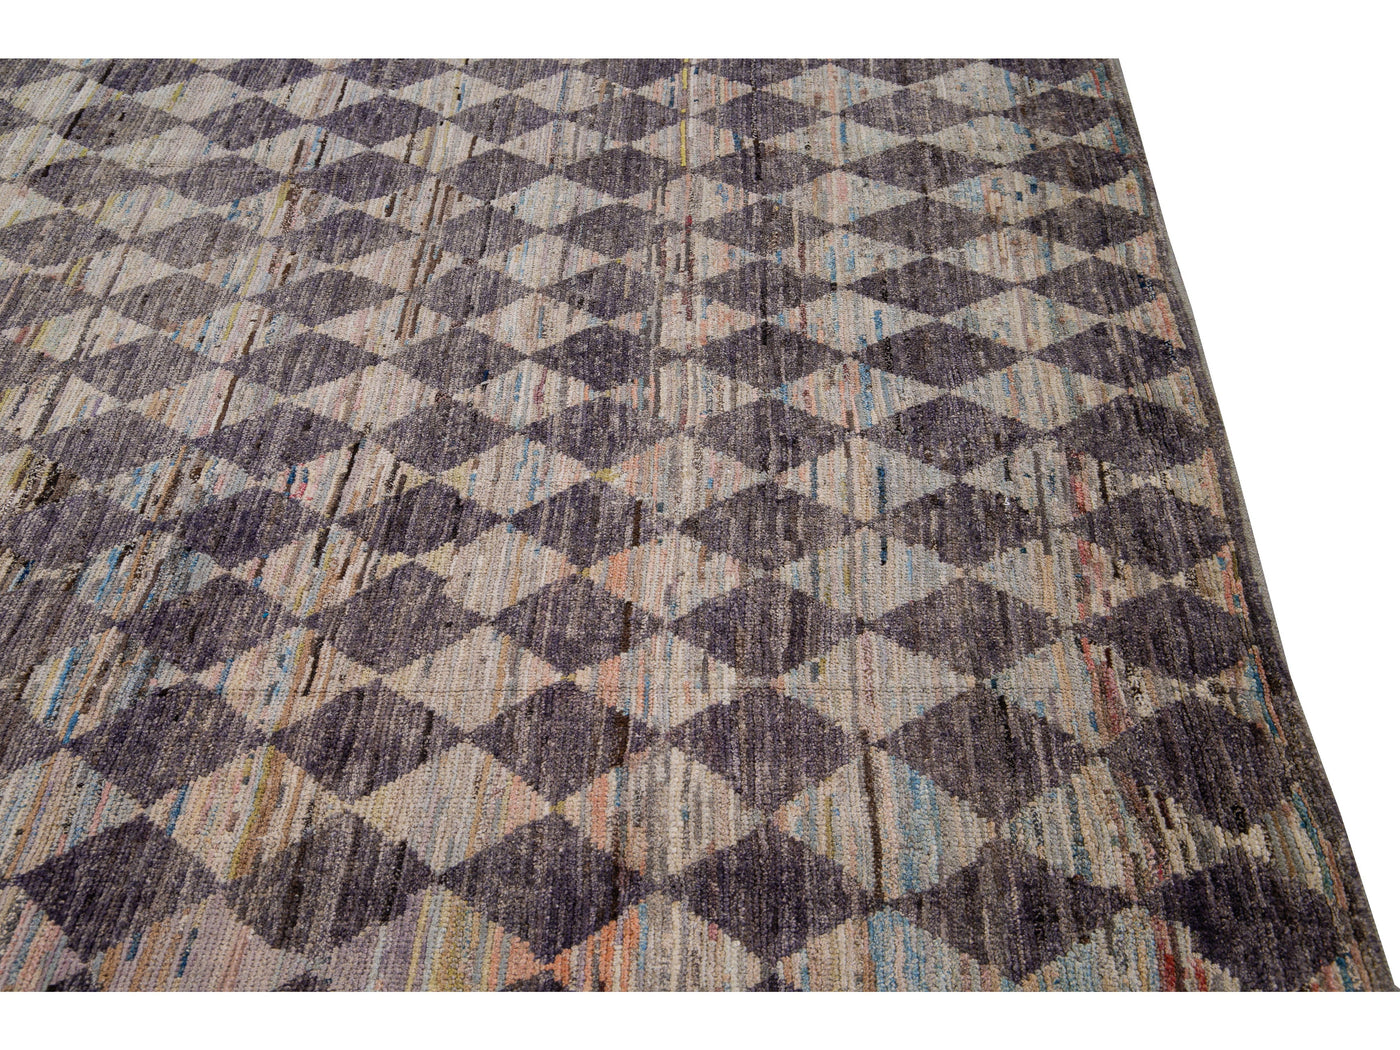  Modern Moroccan Style Handmade Diamond Check Pattern Brown Square Wool Rug